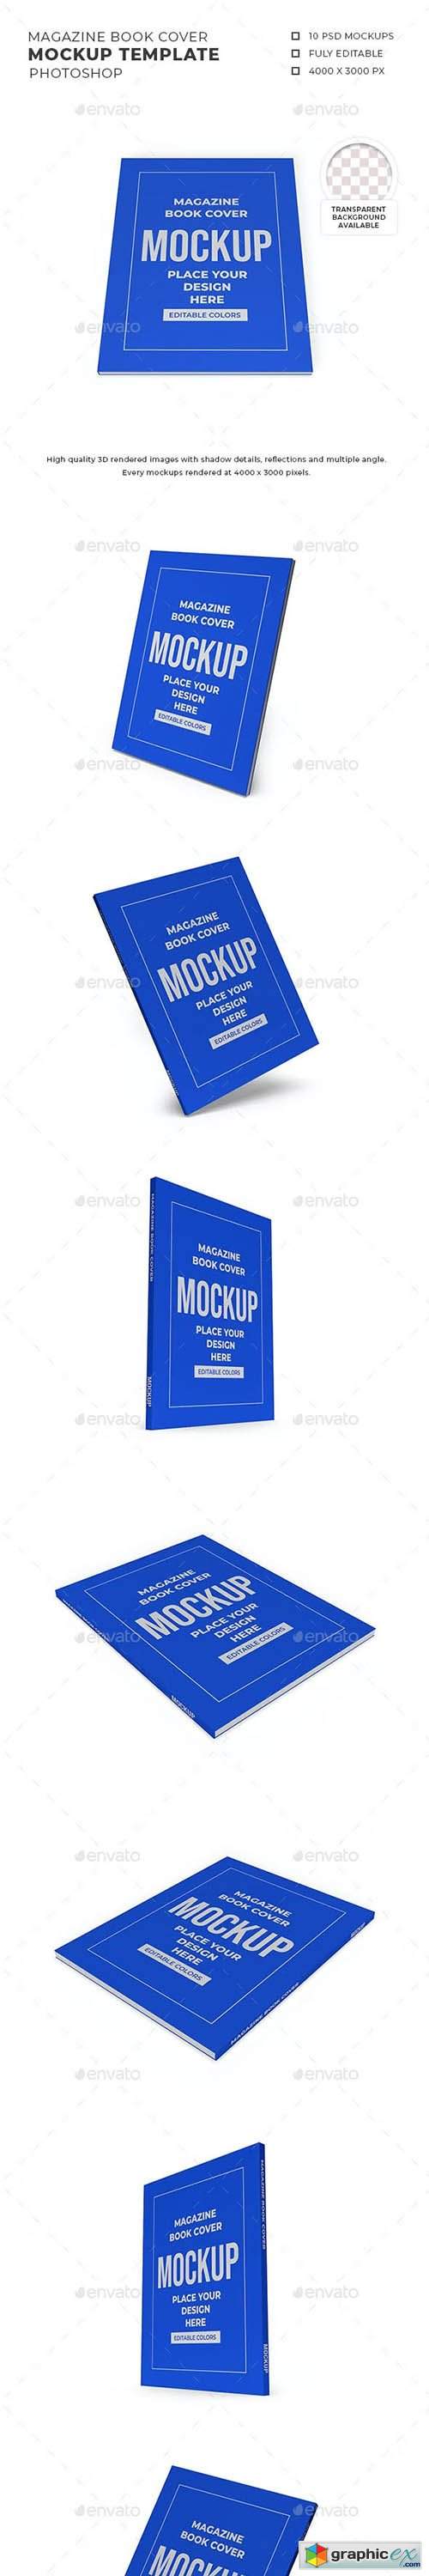 Magazine Book Cover Mockup Template Set 